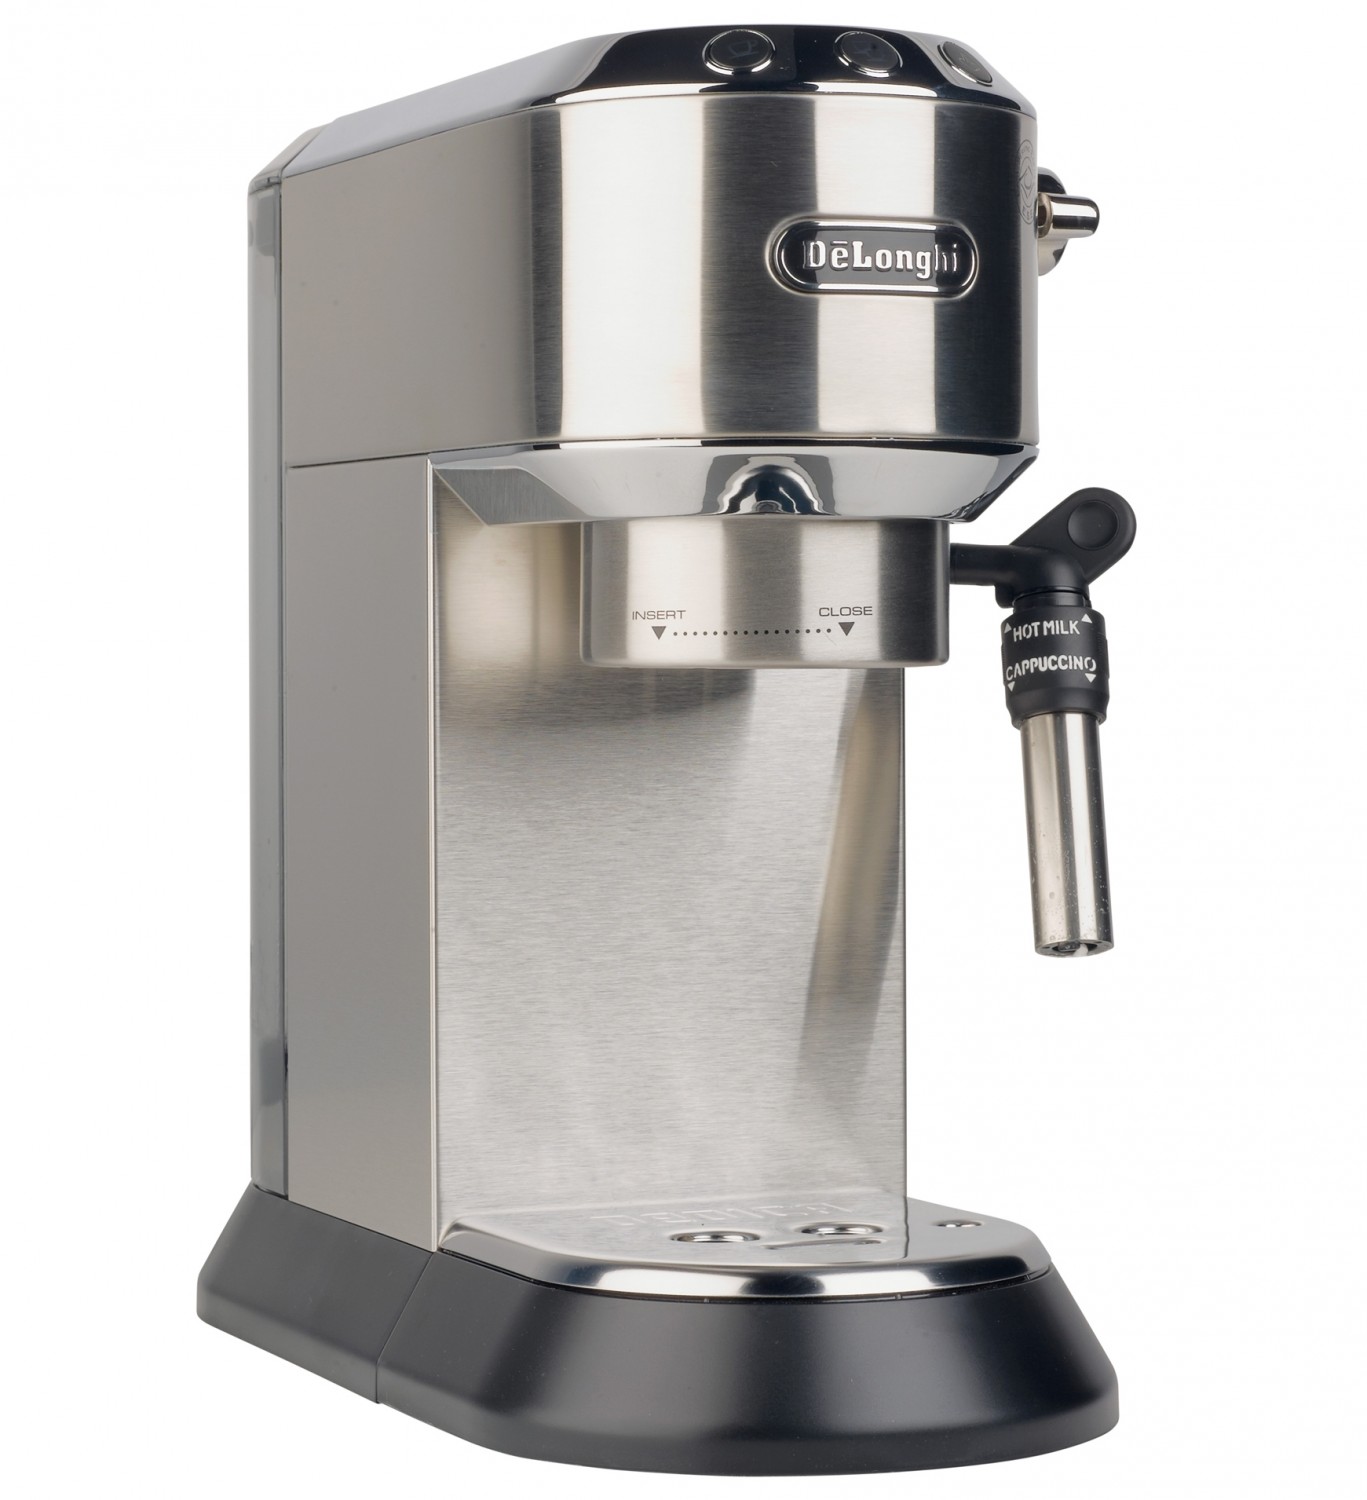 Espressomaschine DeLonghi Dedica Style im Test, Bild 20